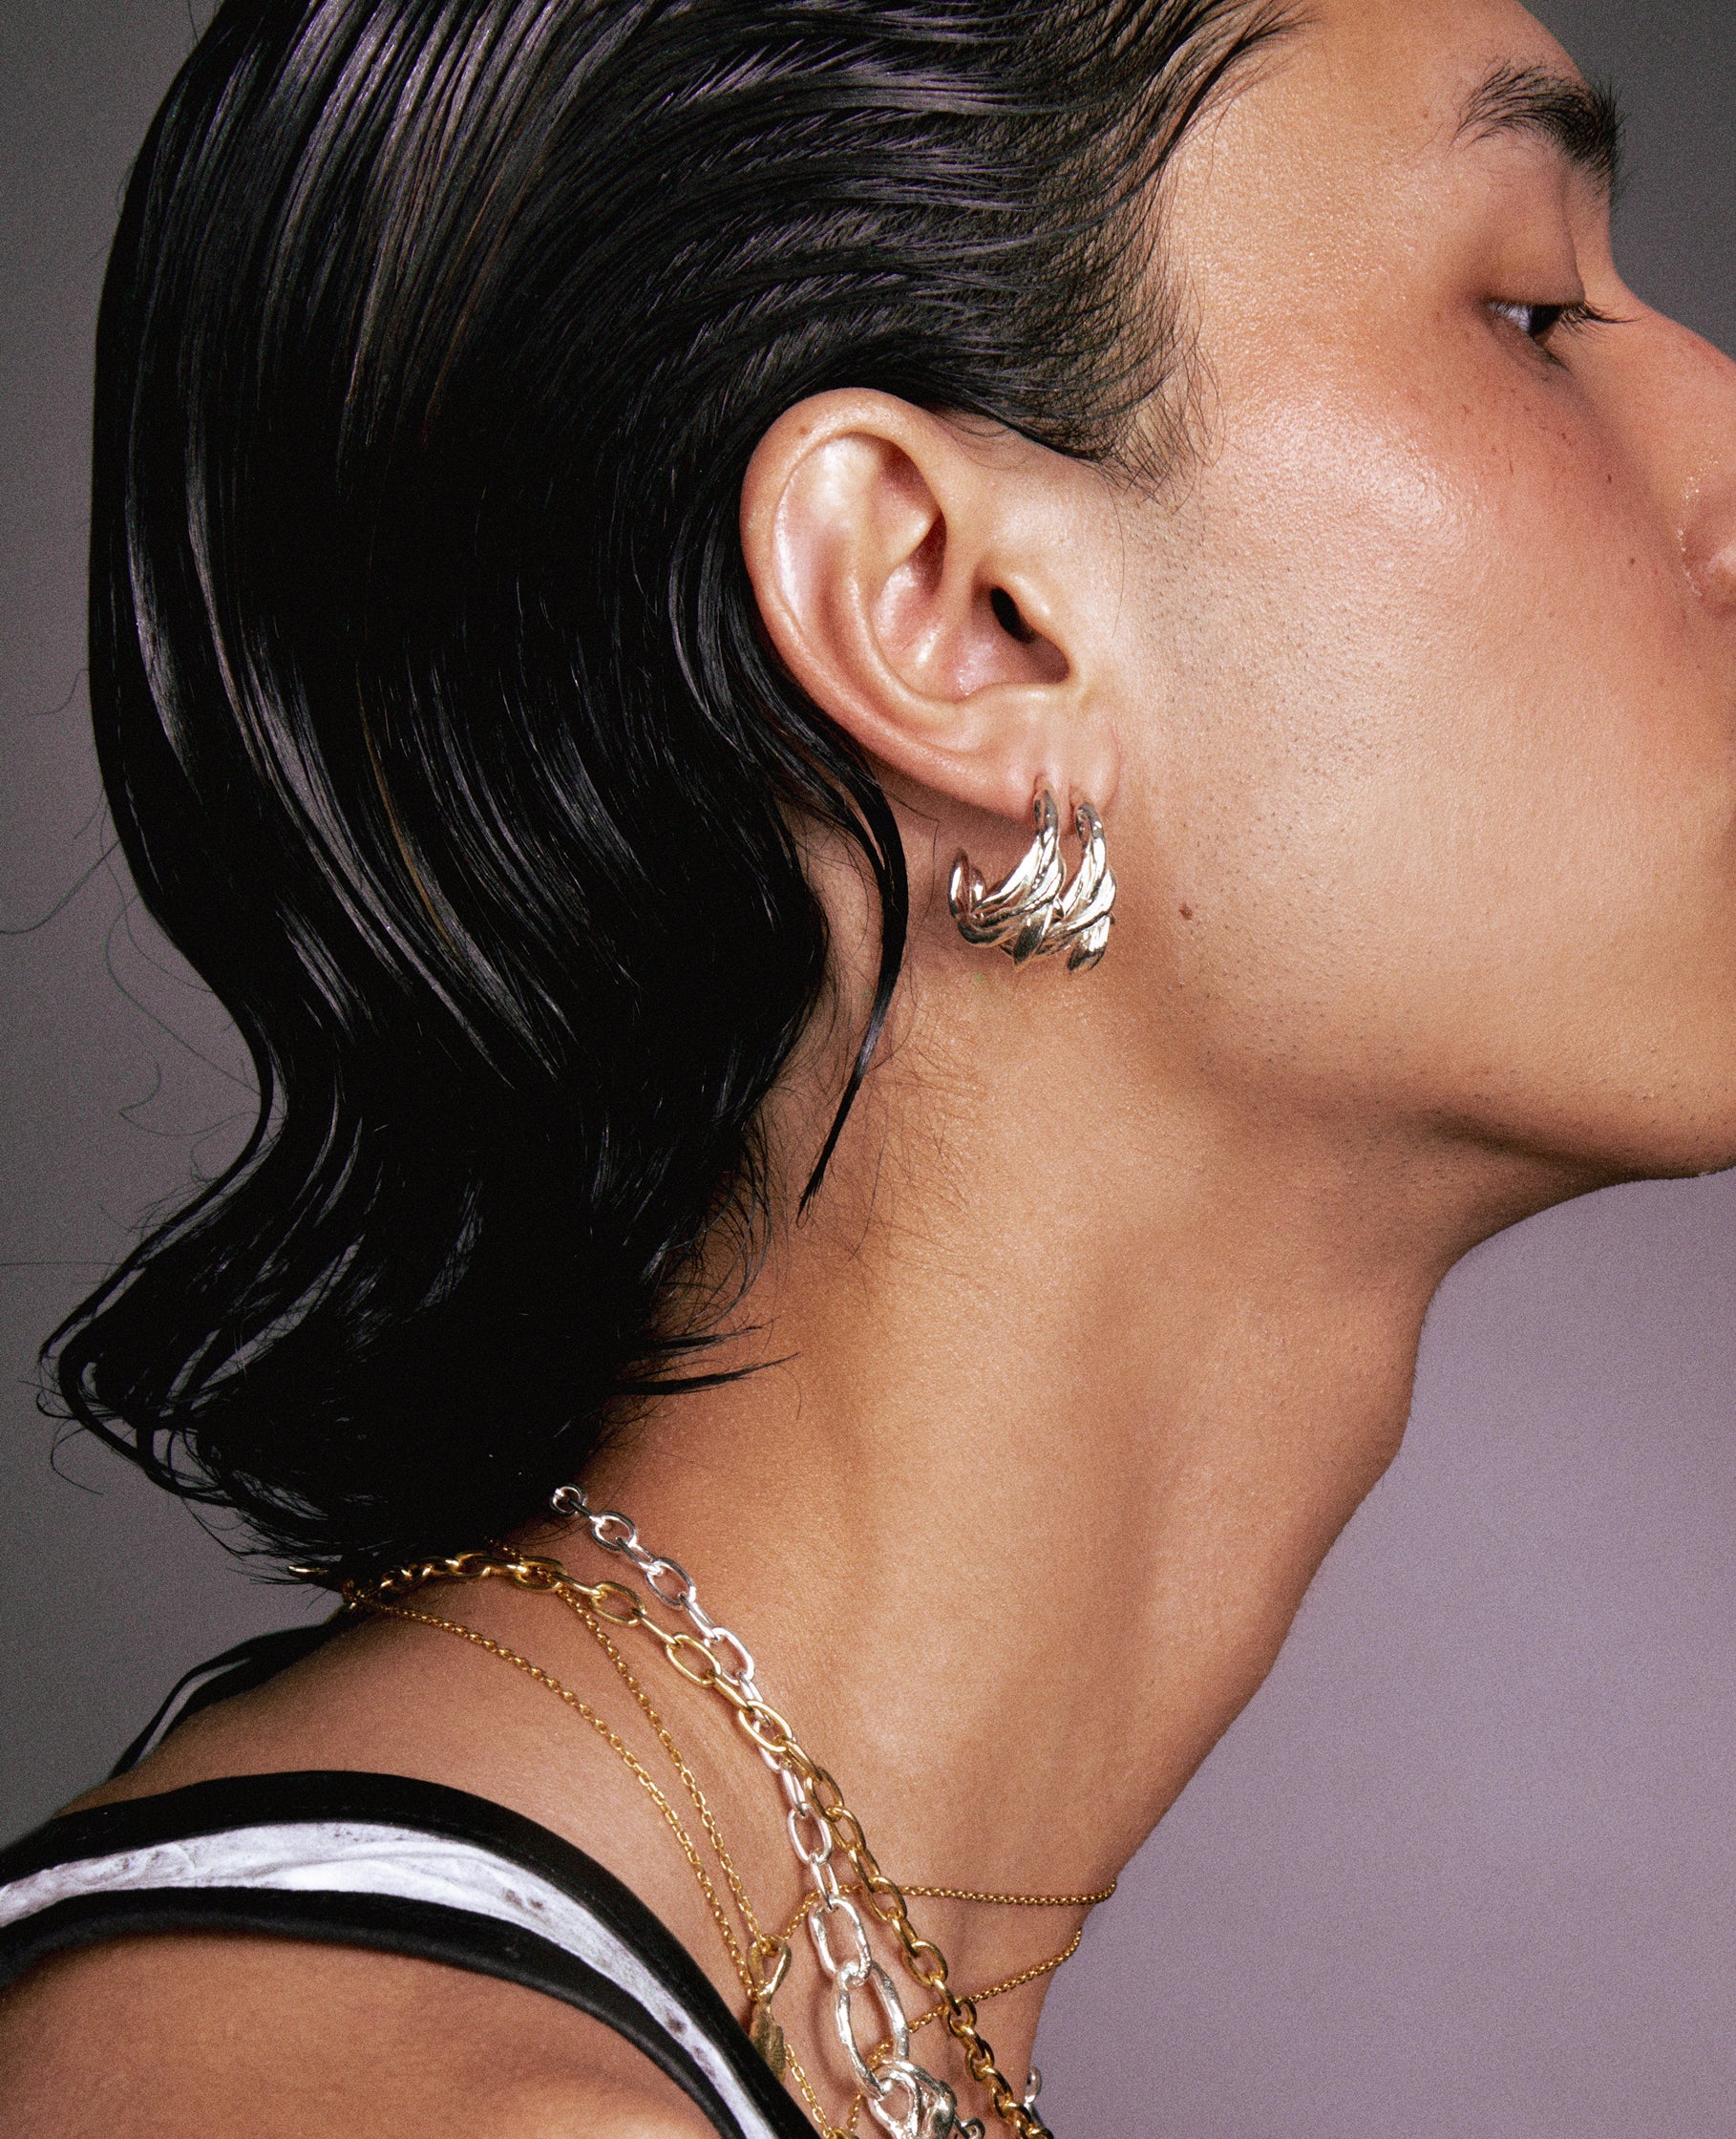 ALGAE TWIST // silver earrings - ORA-C jewelry - handmade jewelry by Montreal based independent designer Caroline Pham